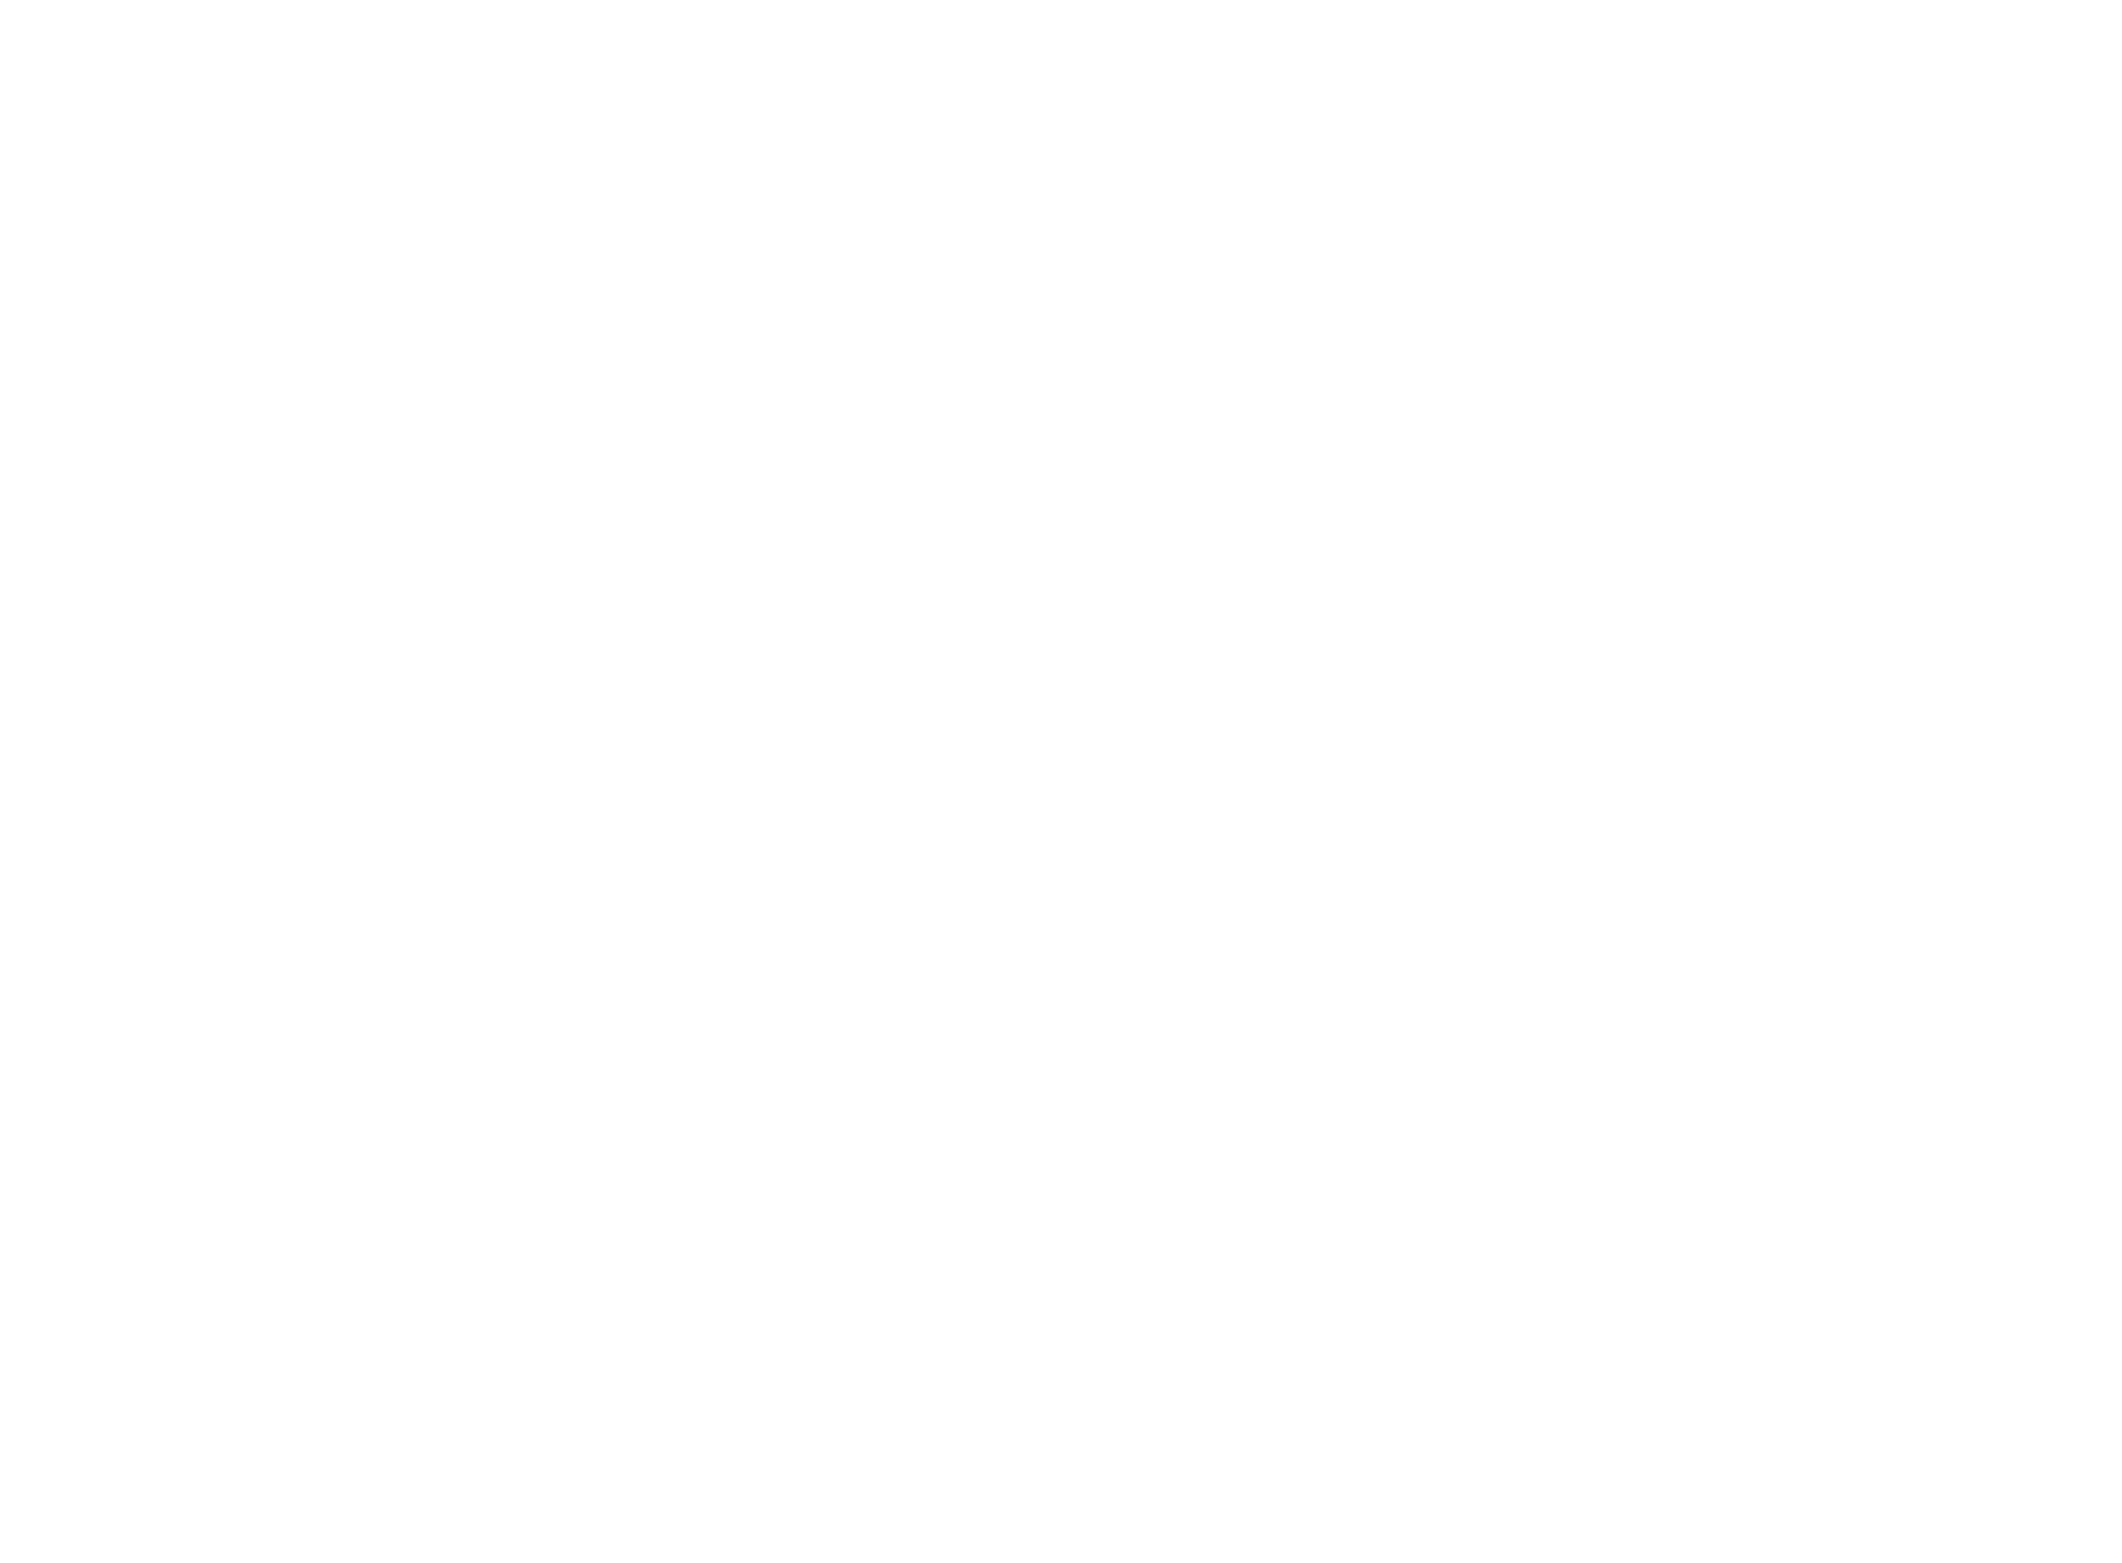 3 Wildlife Parks